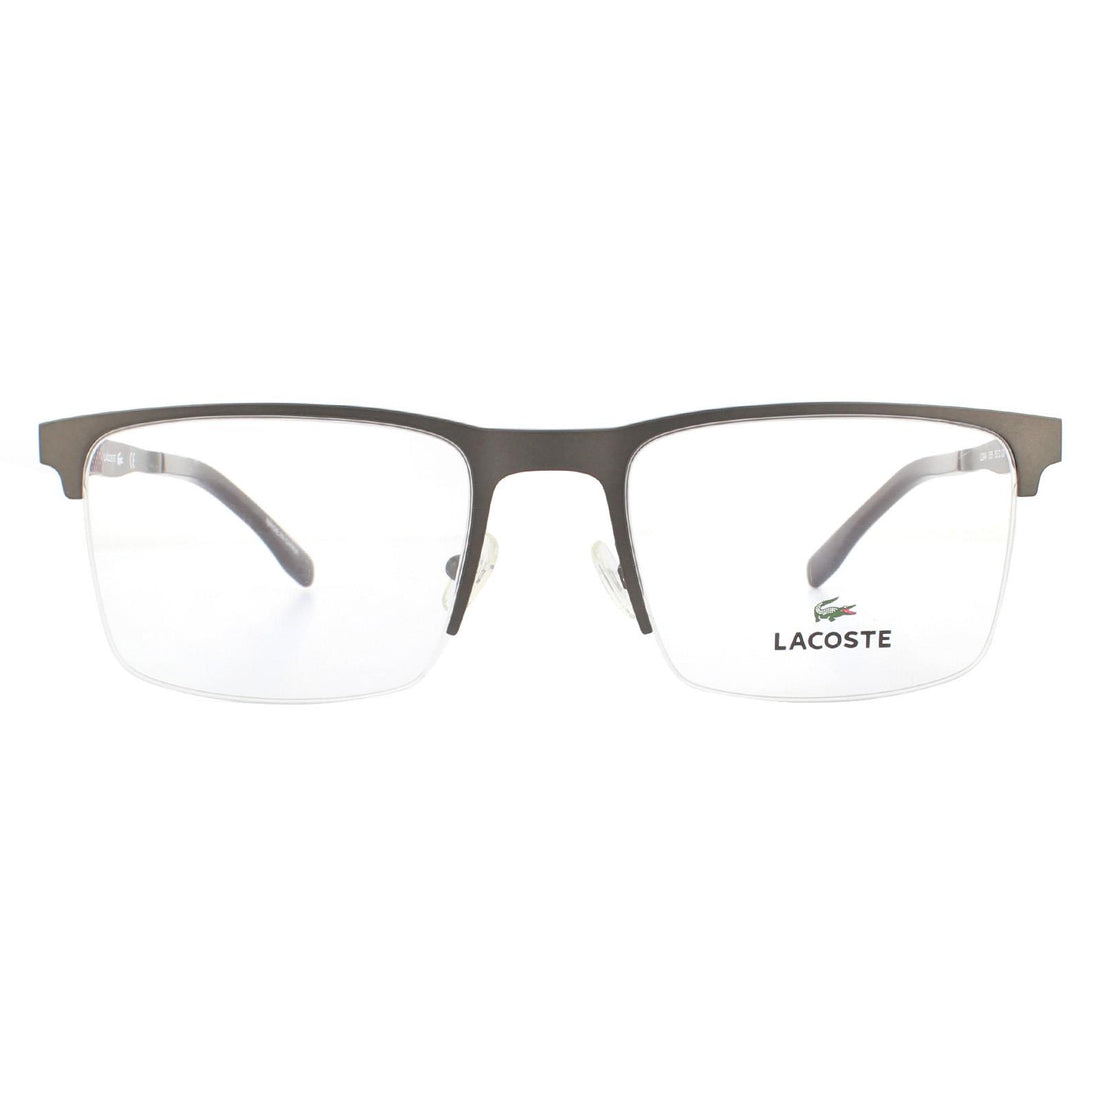 Lacoste L2244 Glasses Frames Matte Dark Gunmetal